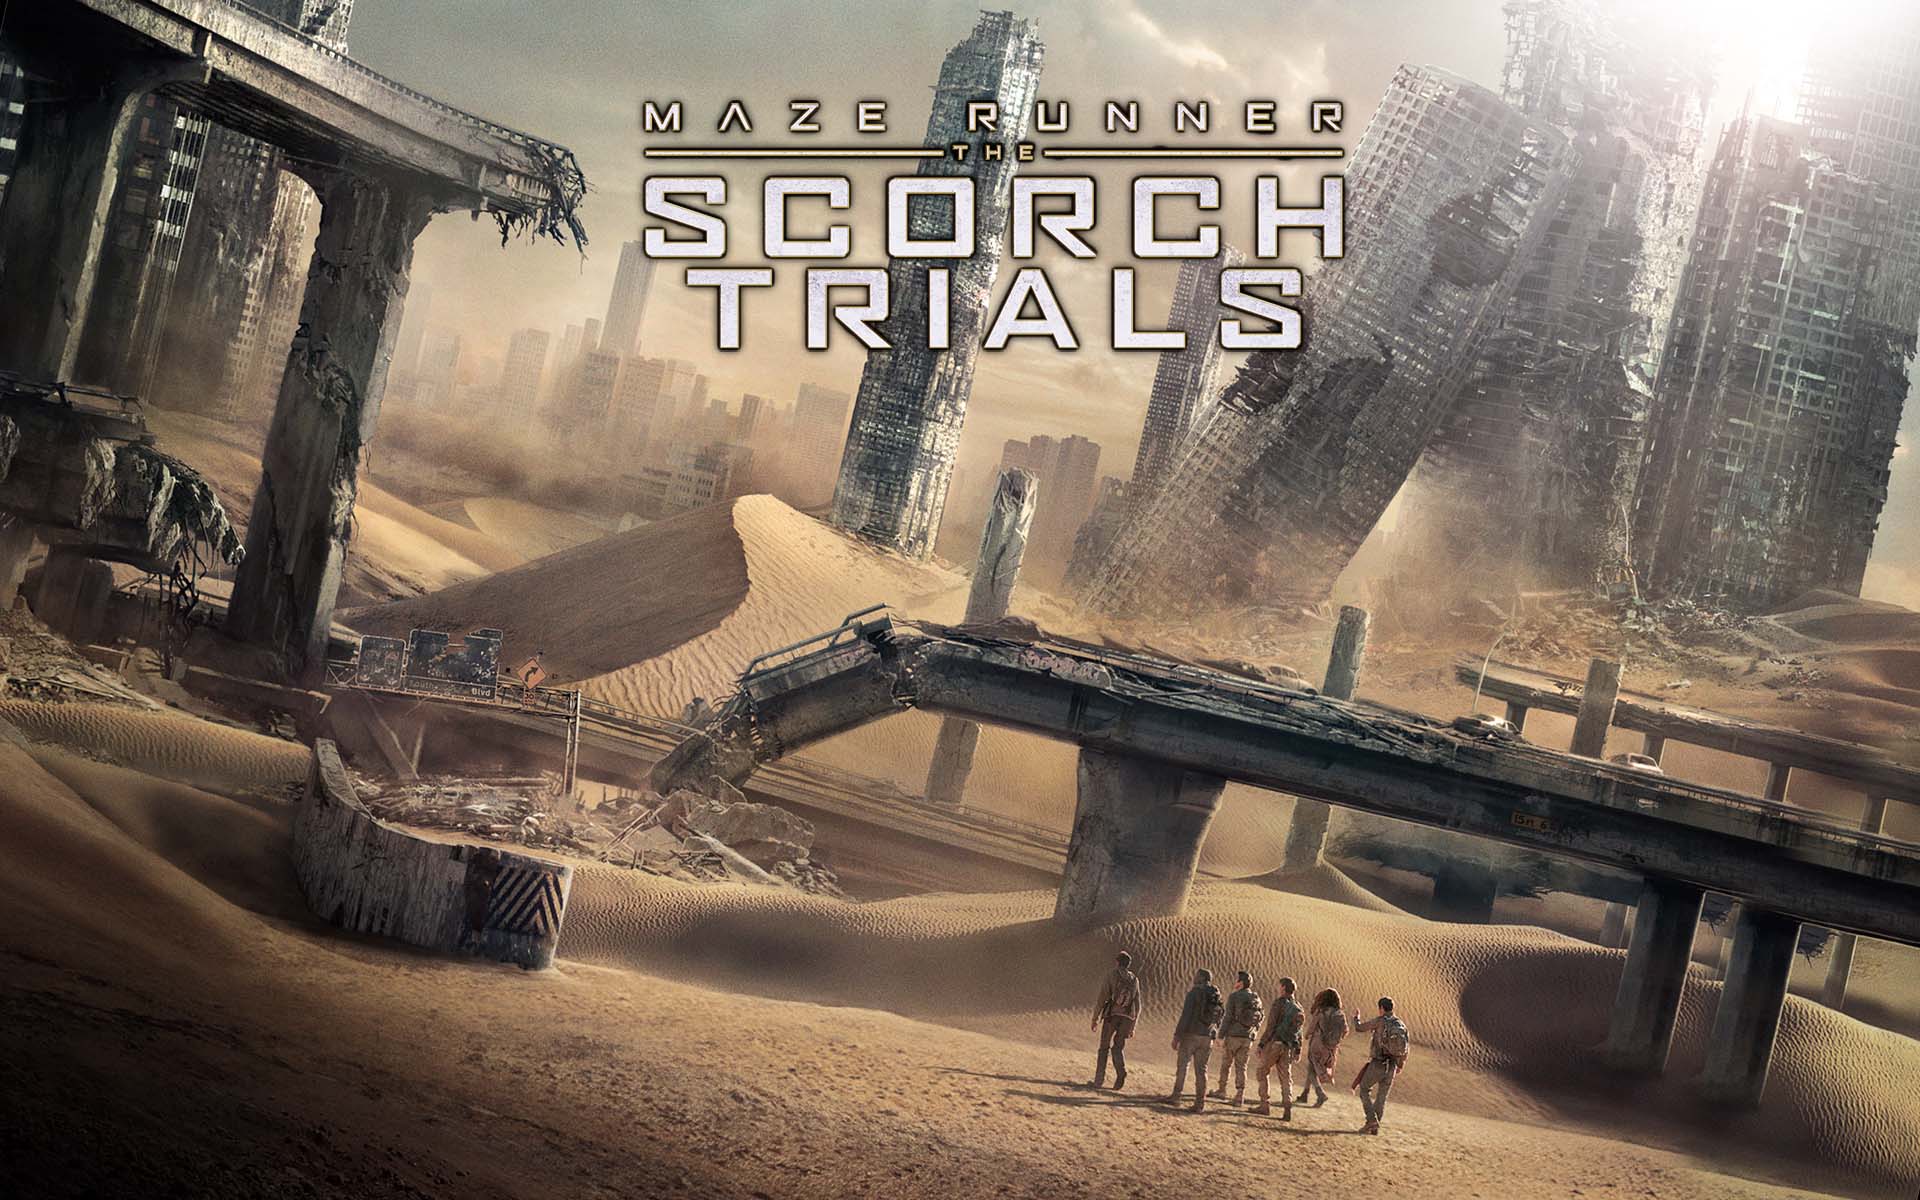 maze-runner-scorch-trials-movie-poster-2015-stills-brenda-cranks.jpg